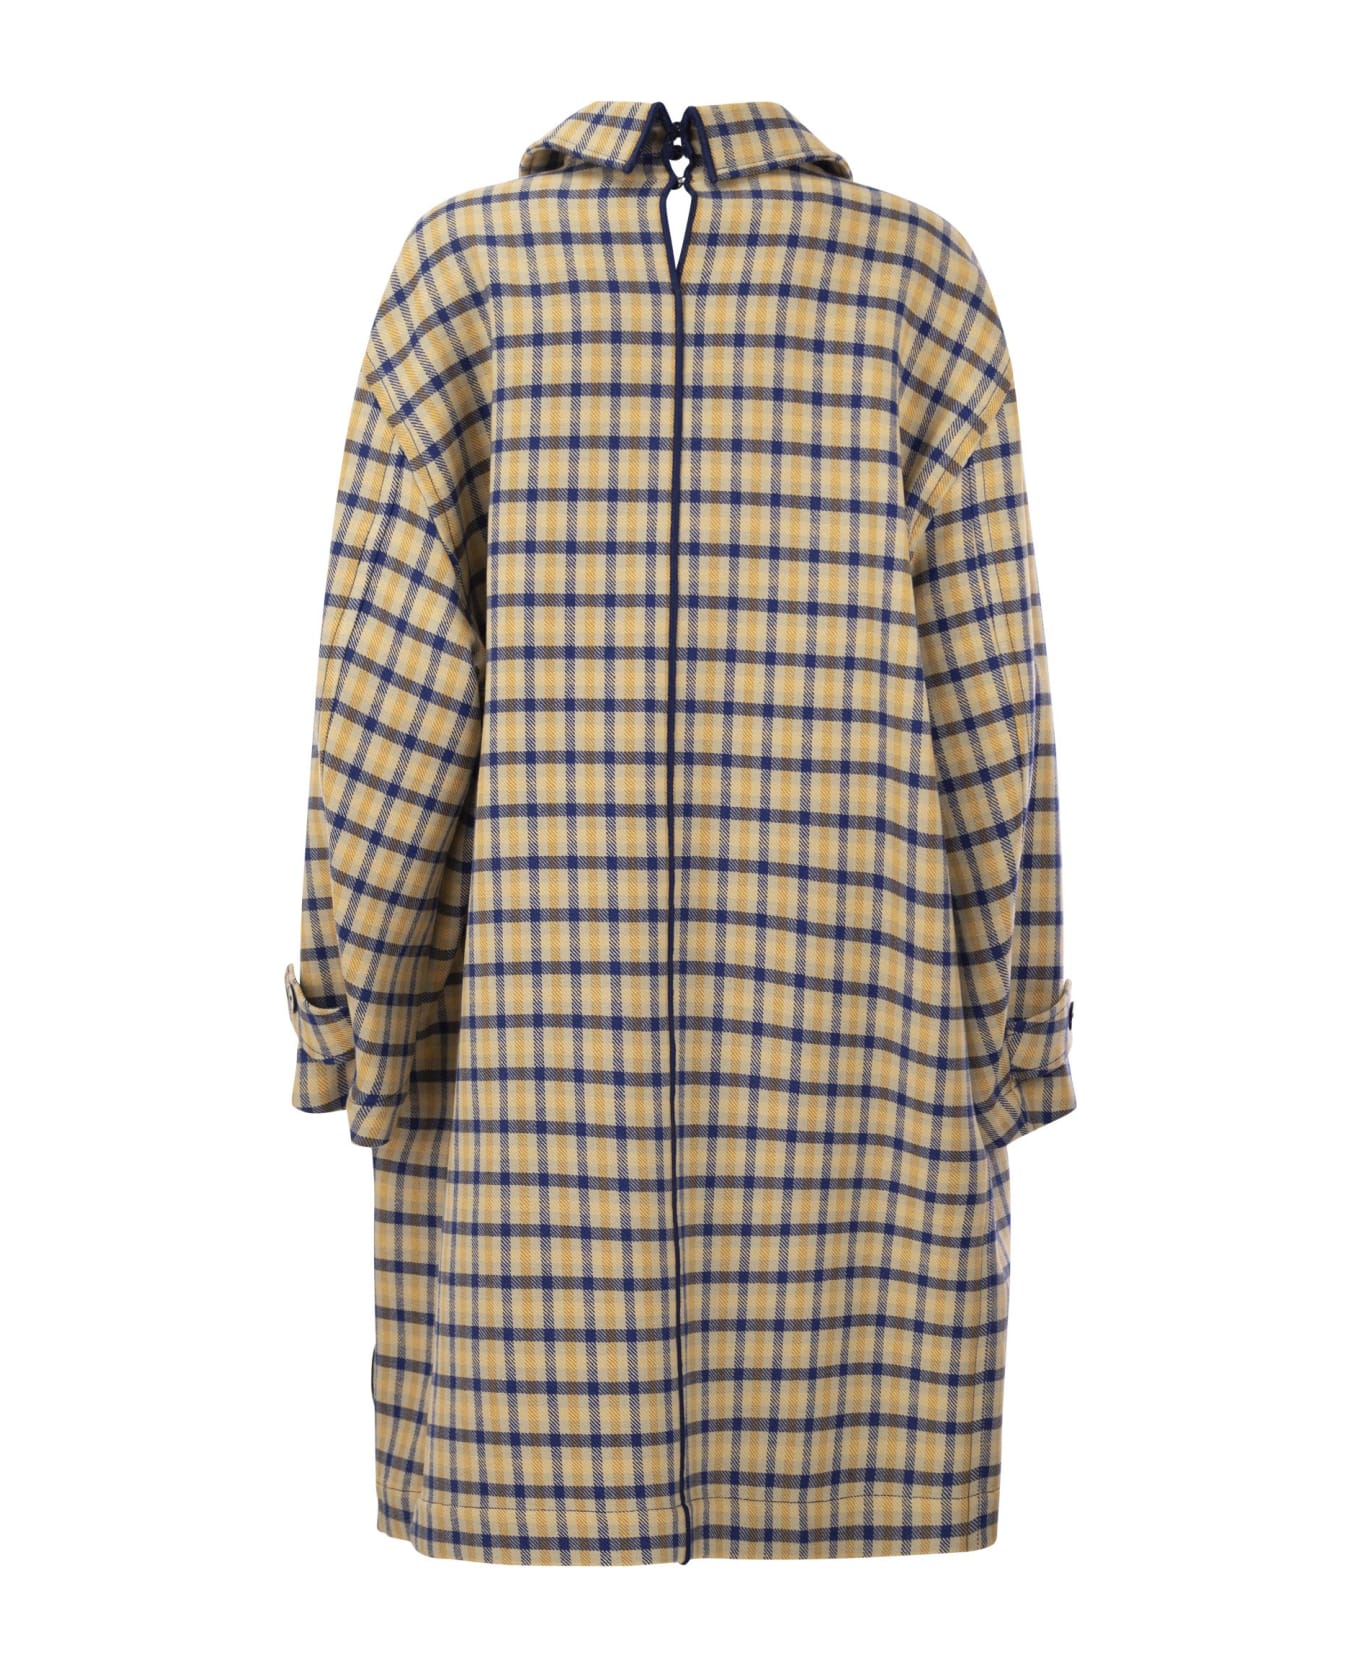 Marni Reversible Wool Coat With Check Pattern - Yellow/blue